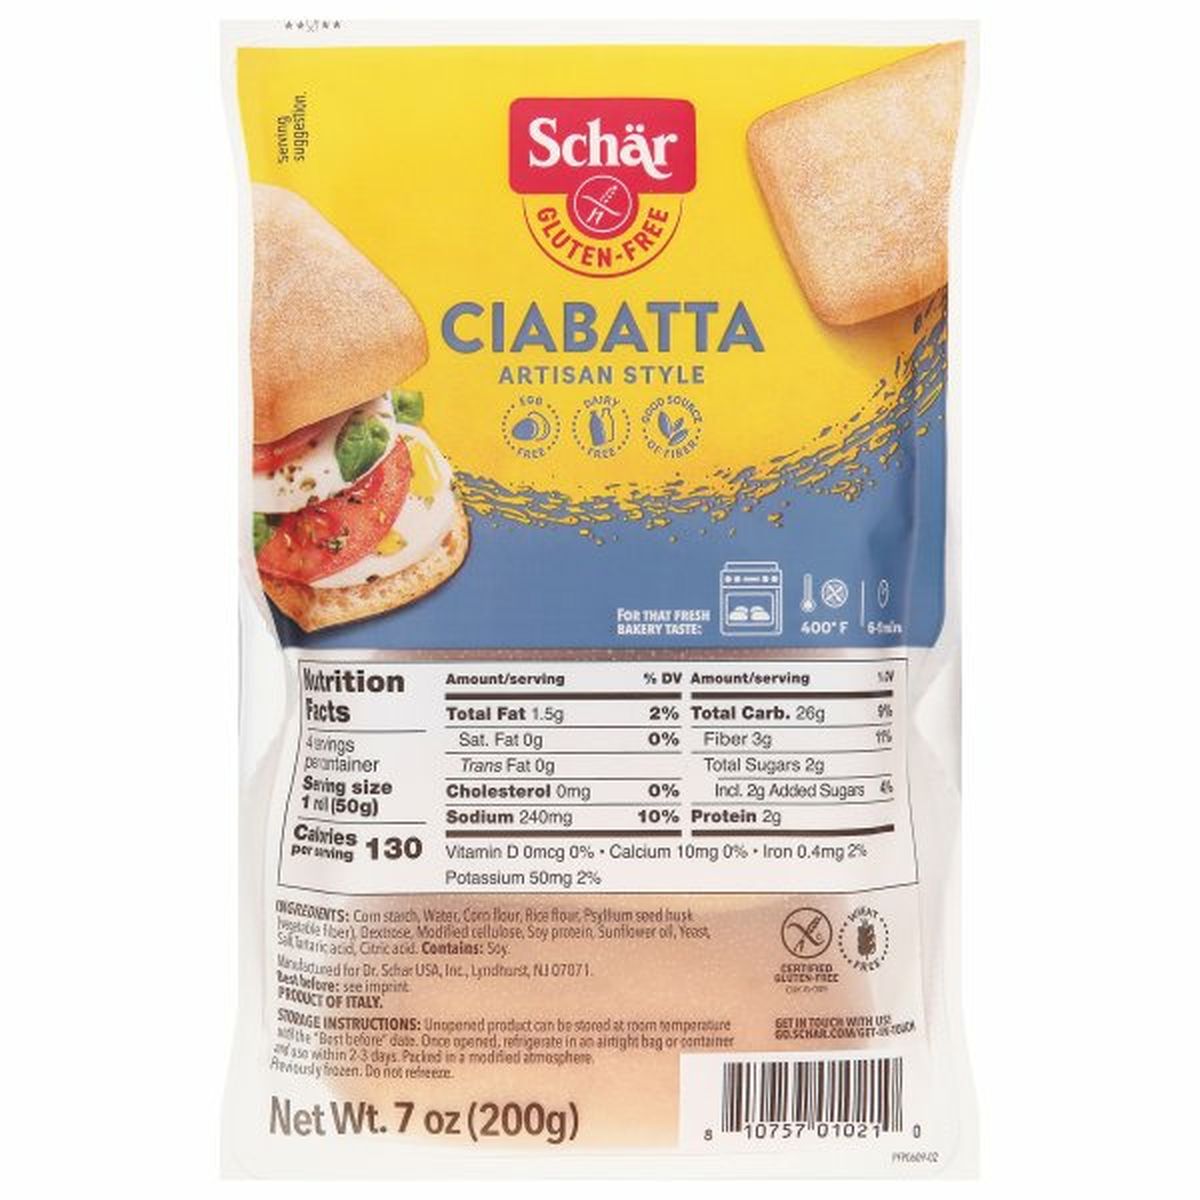 Calories in Schar Ciabatta, Gluten-Free, Artisan Style